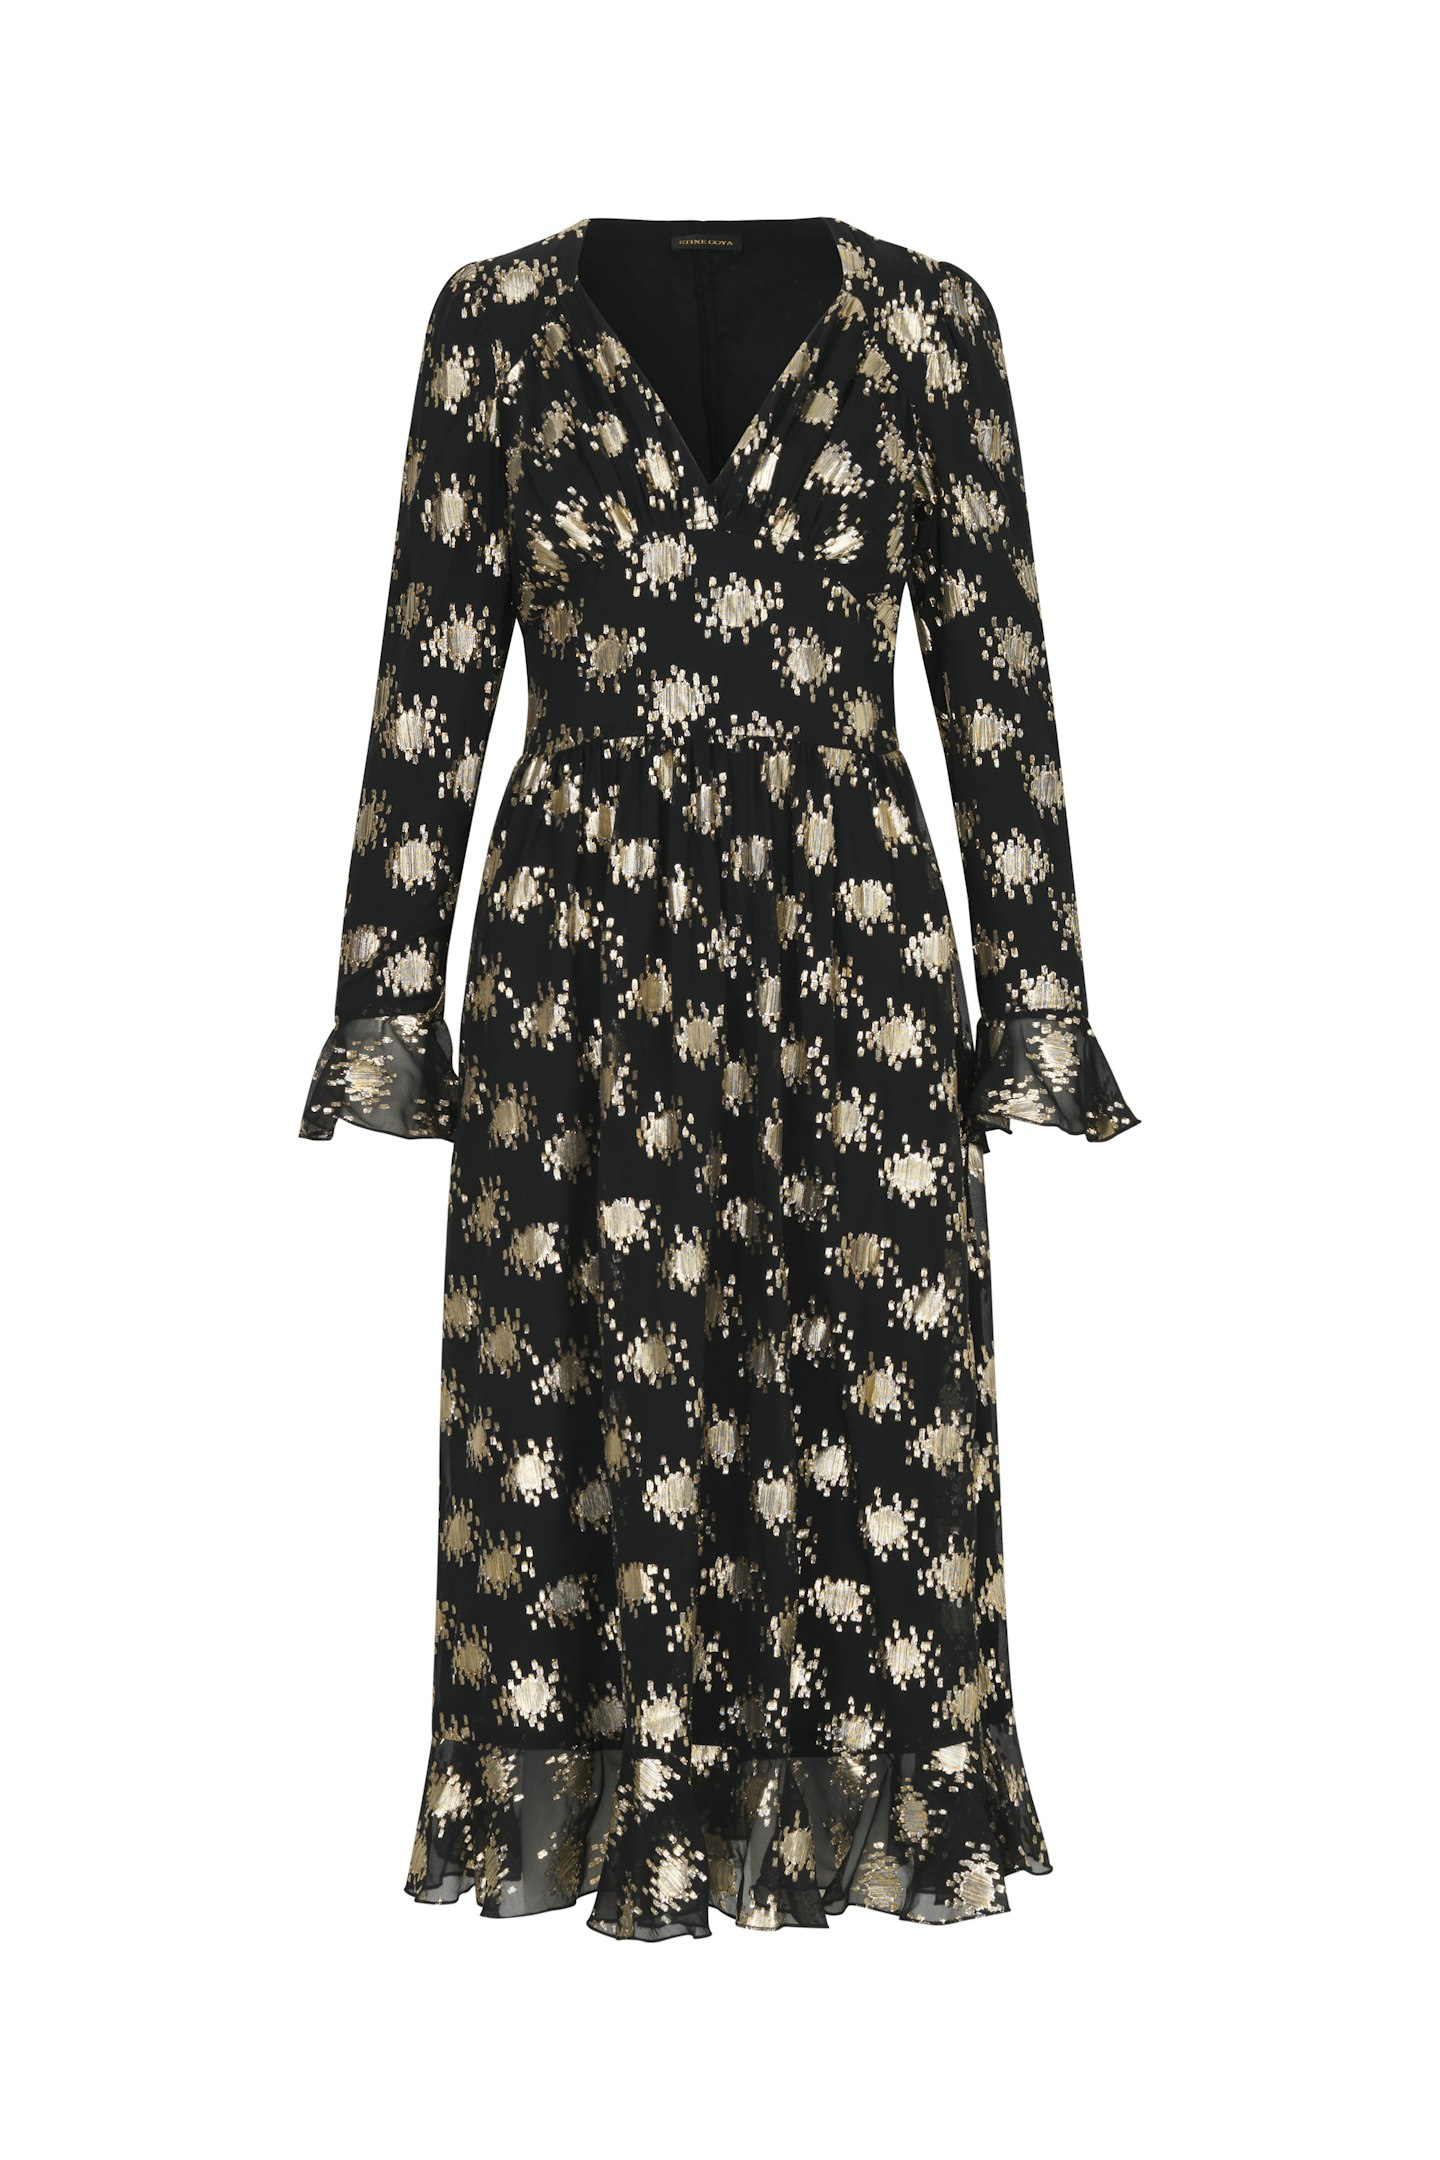 Stine Goya, William Metallic Fil Coupe Silk-Blend Midi Dress, £480, Net-A-Porter